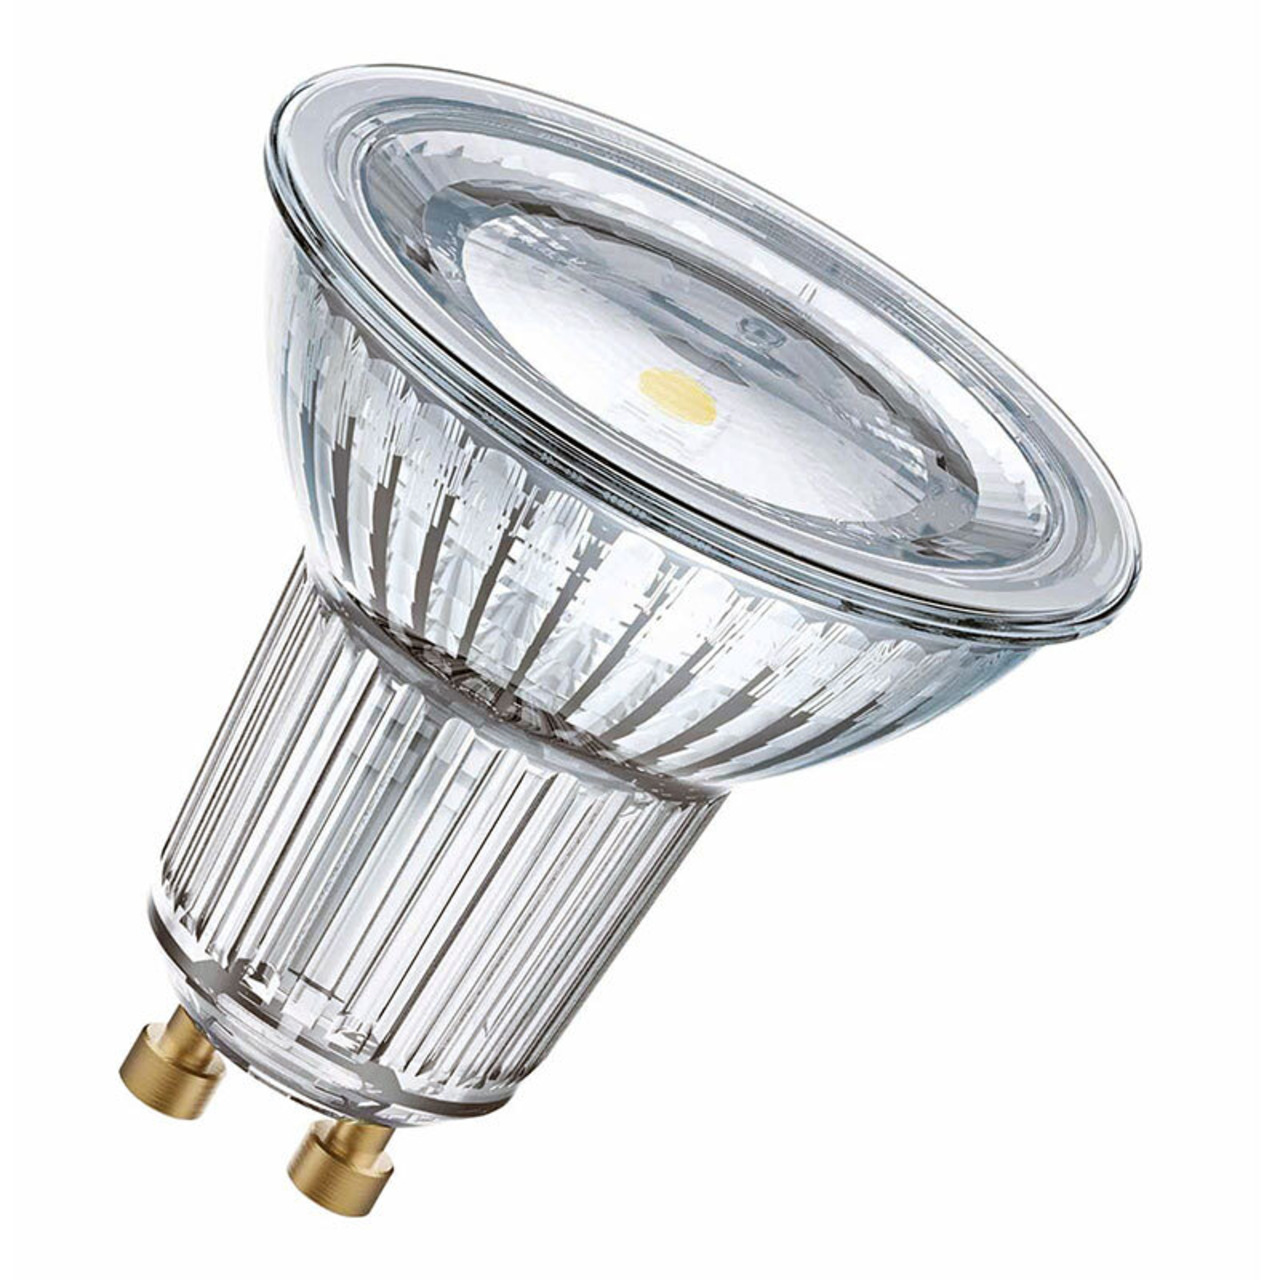 OSRAM LED STAR 4-3-W-GU10-LED-Lampe mit Glas-Reflektor- neutralweiss- 120- unter Beleuchtung